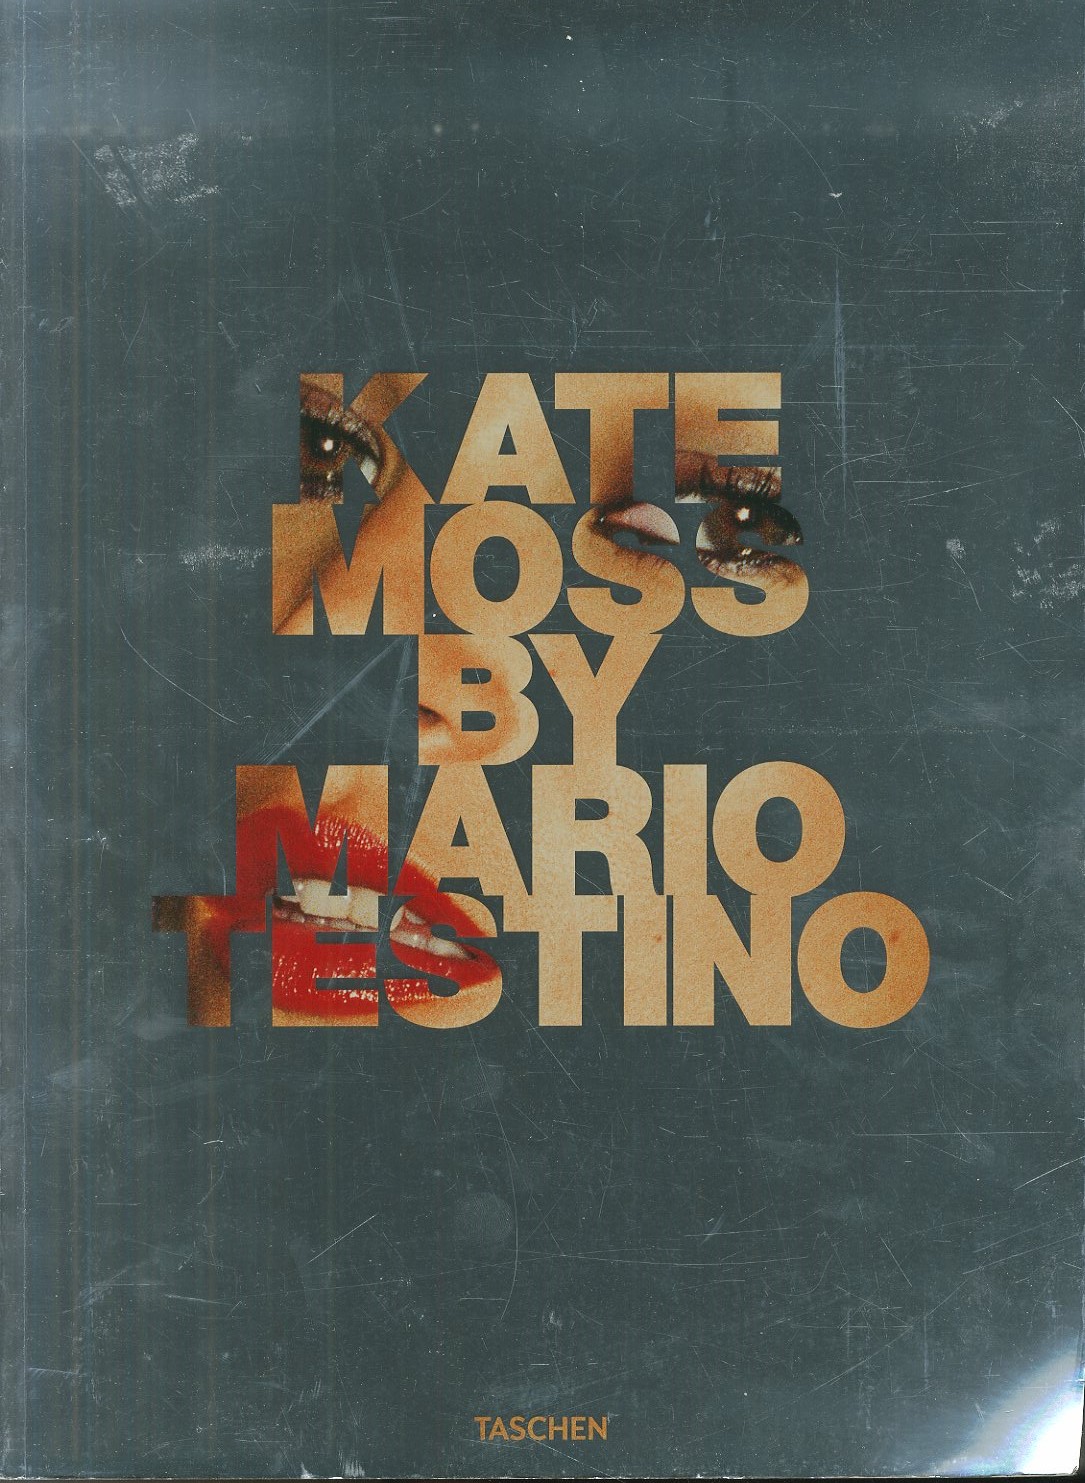 「KATE MOSS BY MARIO TESTINO / Mario Testino」メイン画像